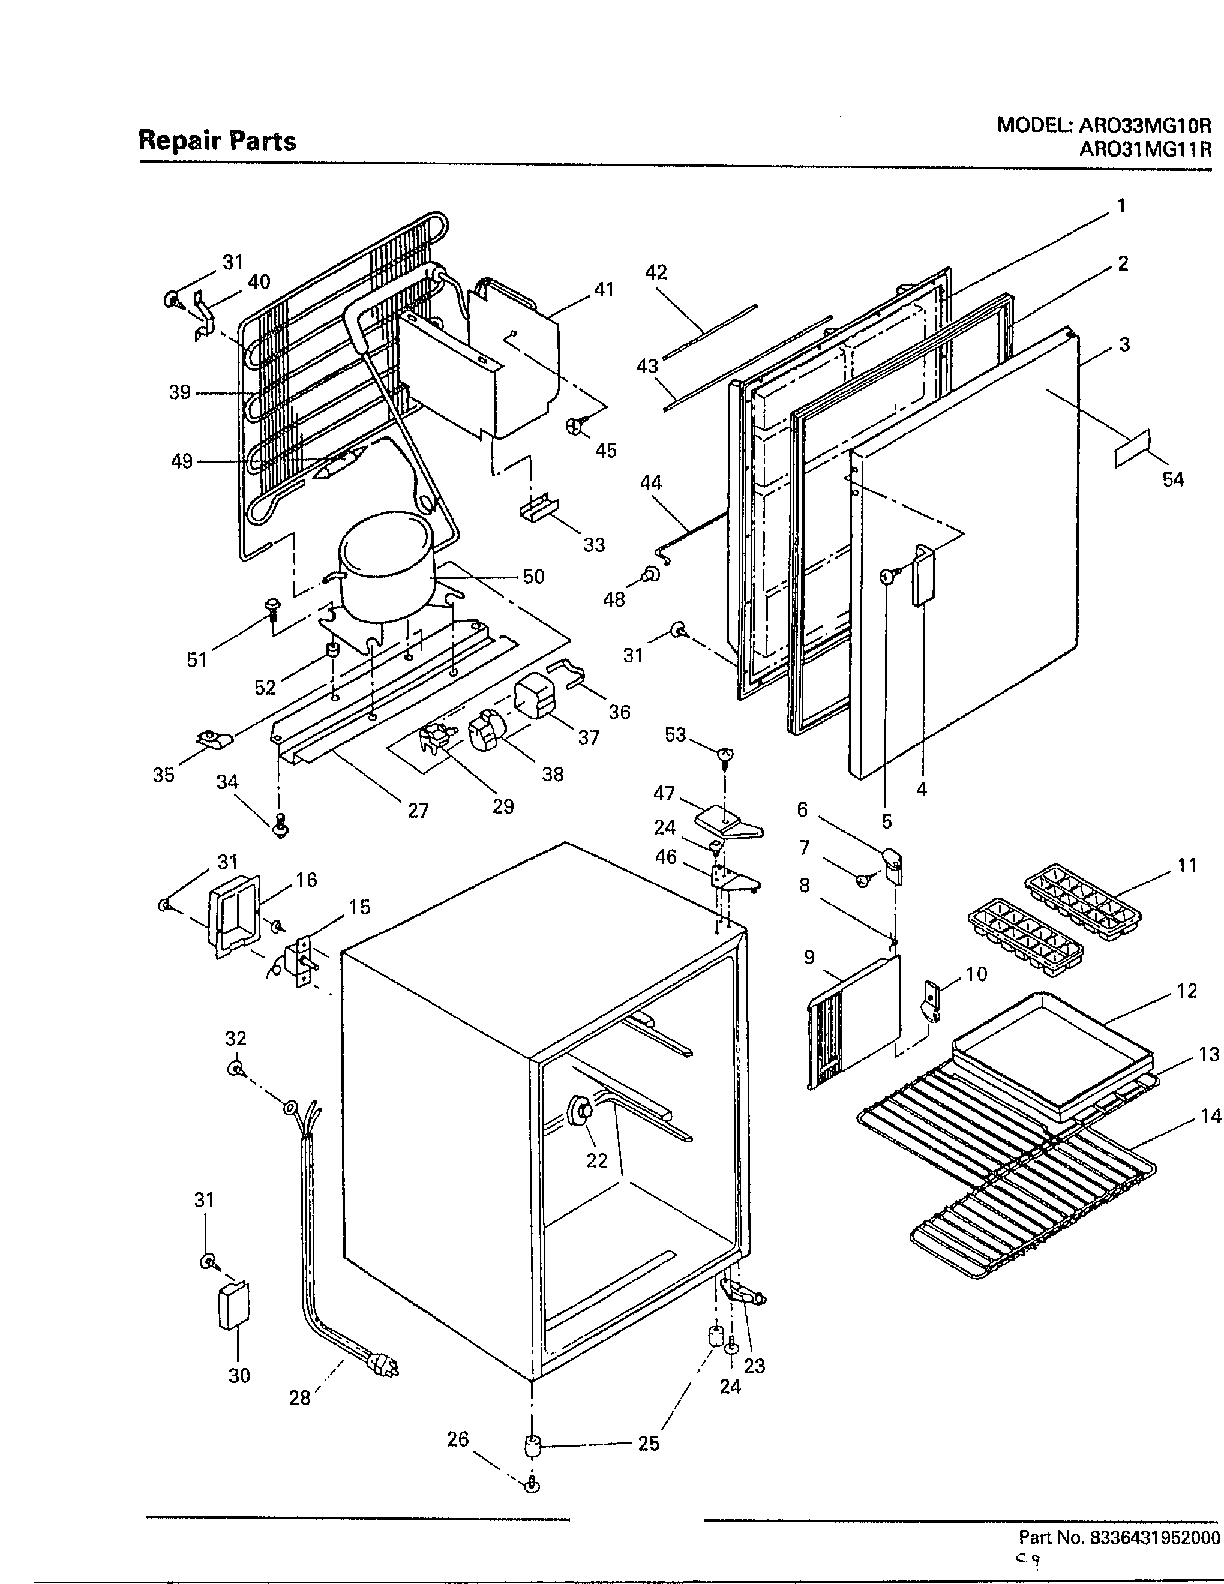 SANYO REFRIGERATOR Parts | Model AR033MG10R | Sears PartsDirect